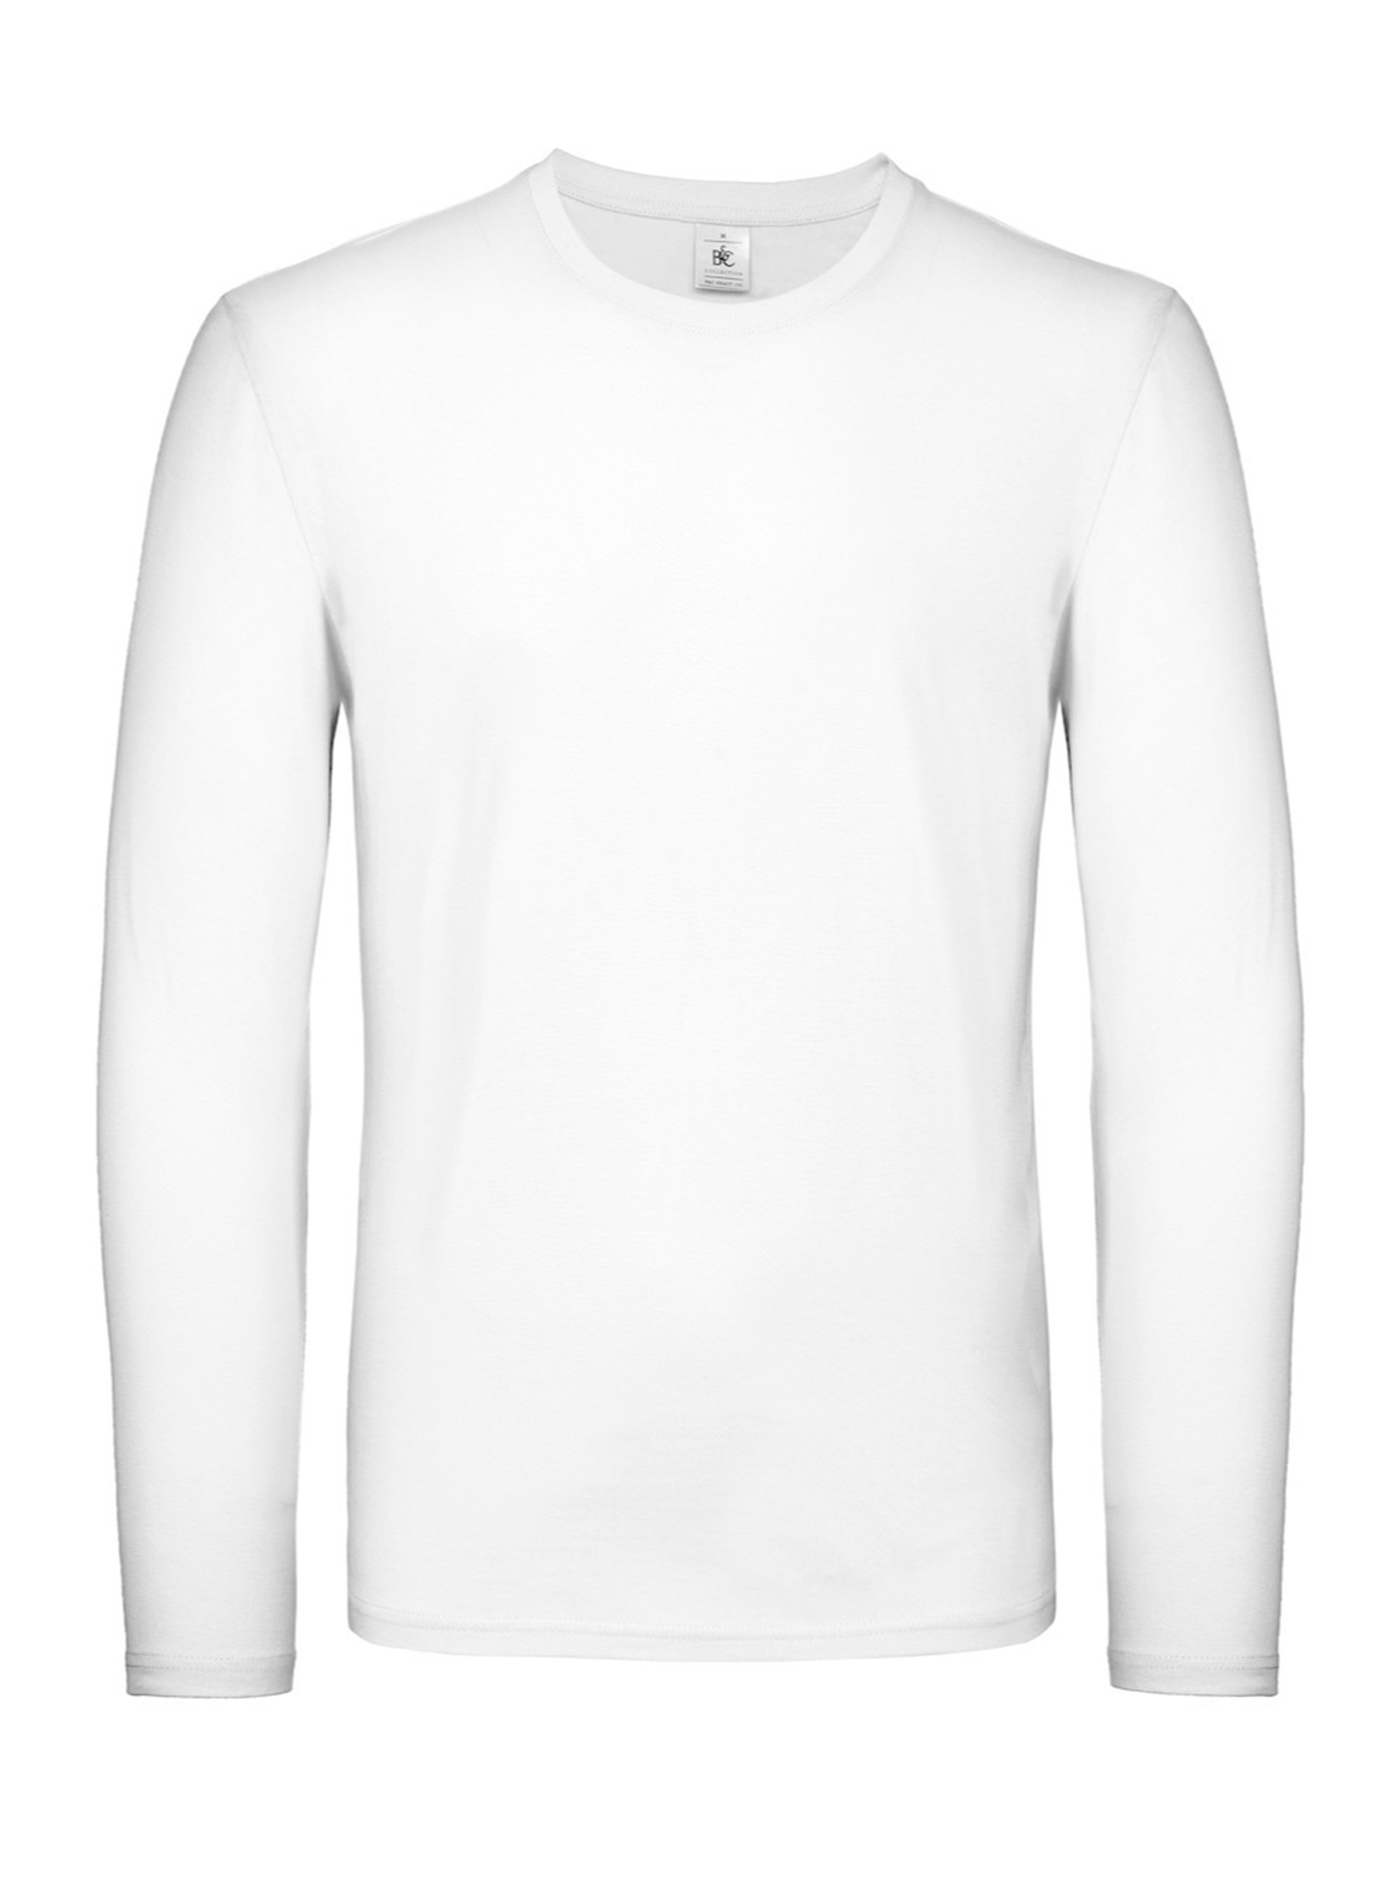 Tričko s dlouhým rukávem B&C Collection - Bílá 3XL